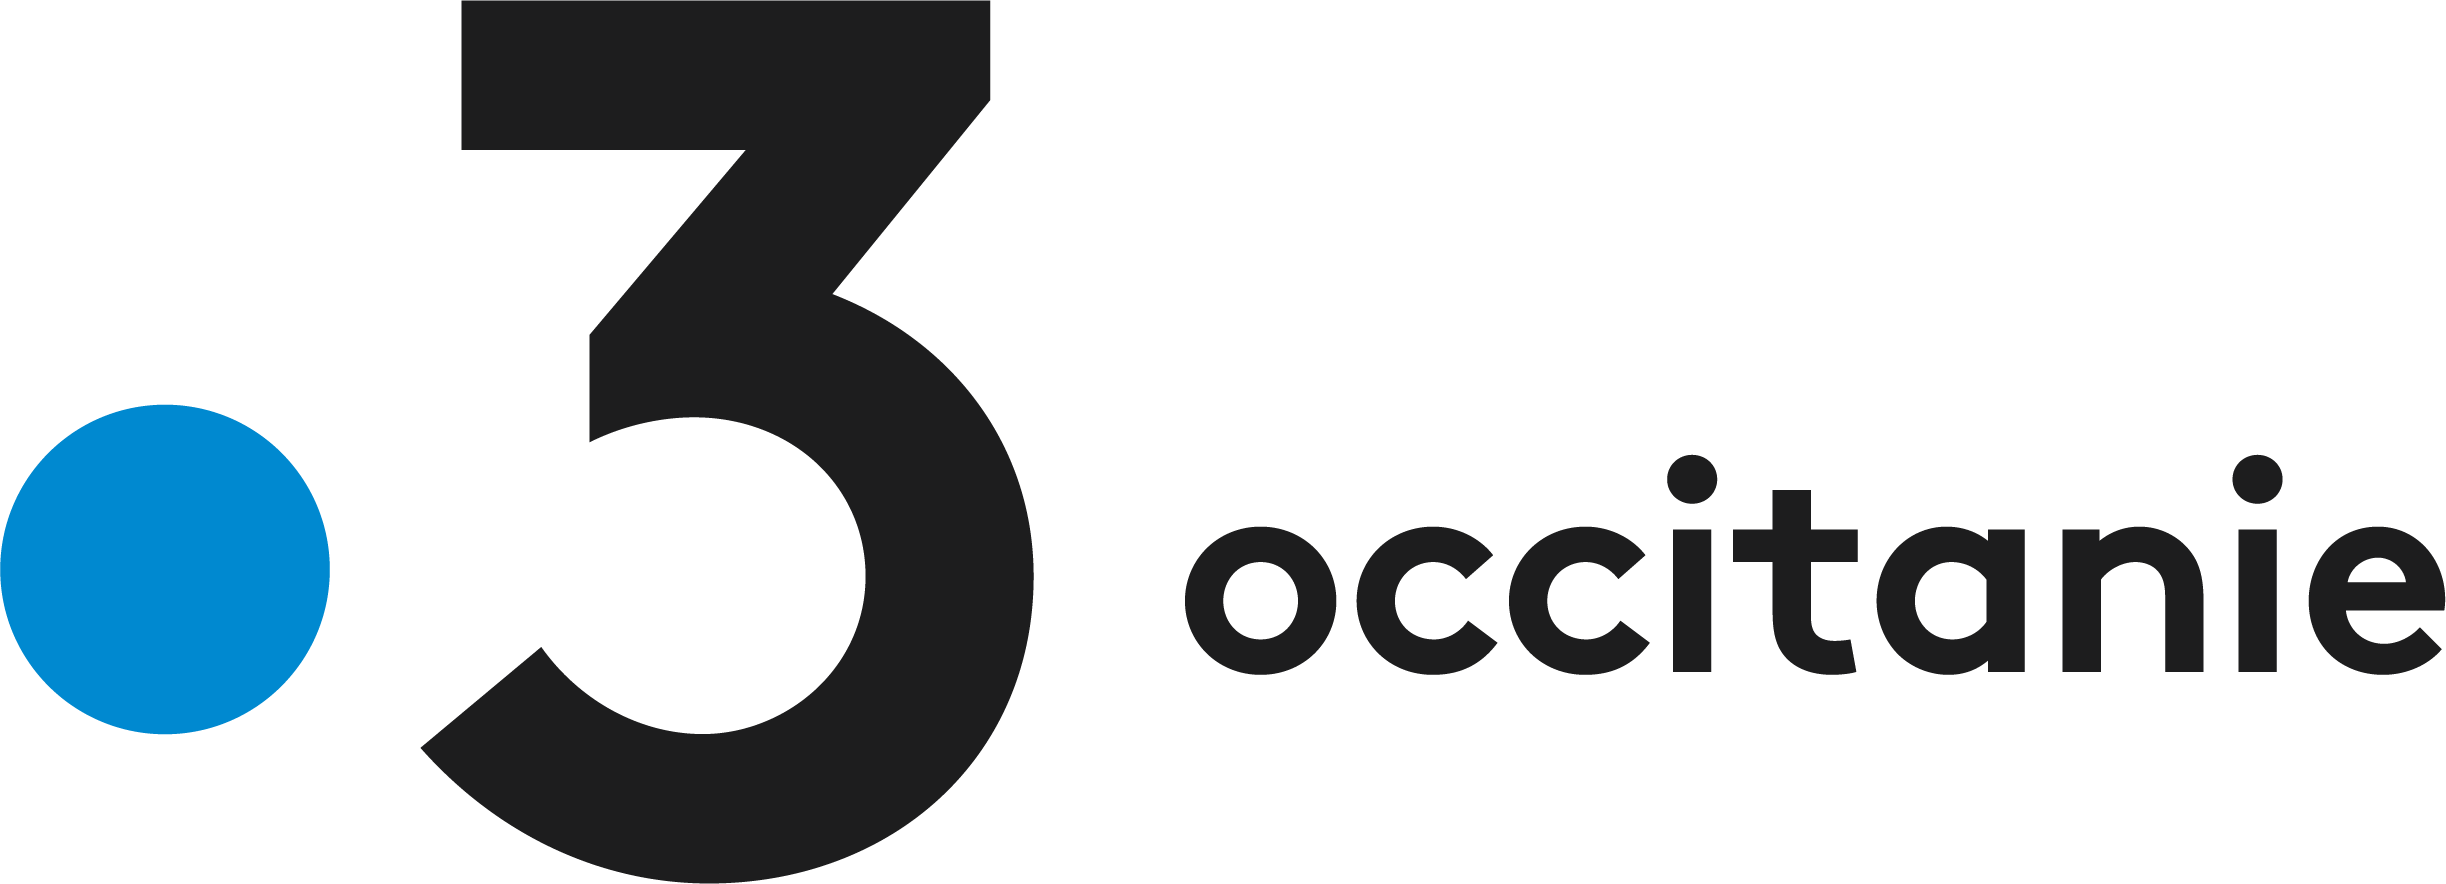 France 3 occitanie logo